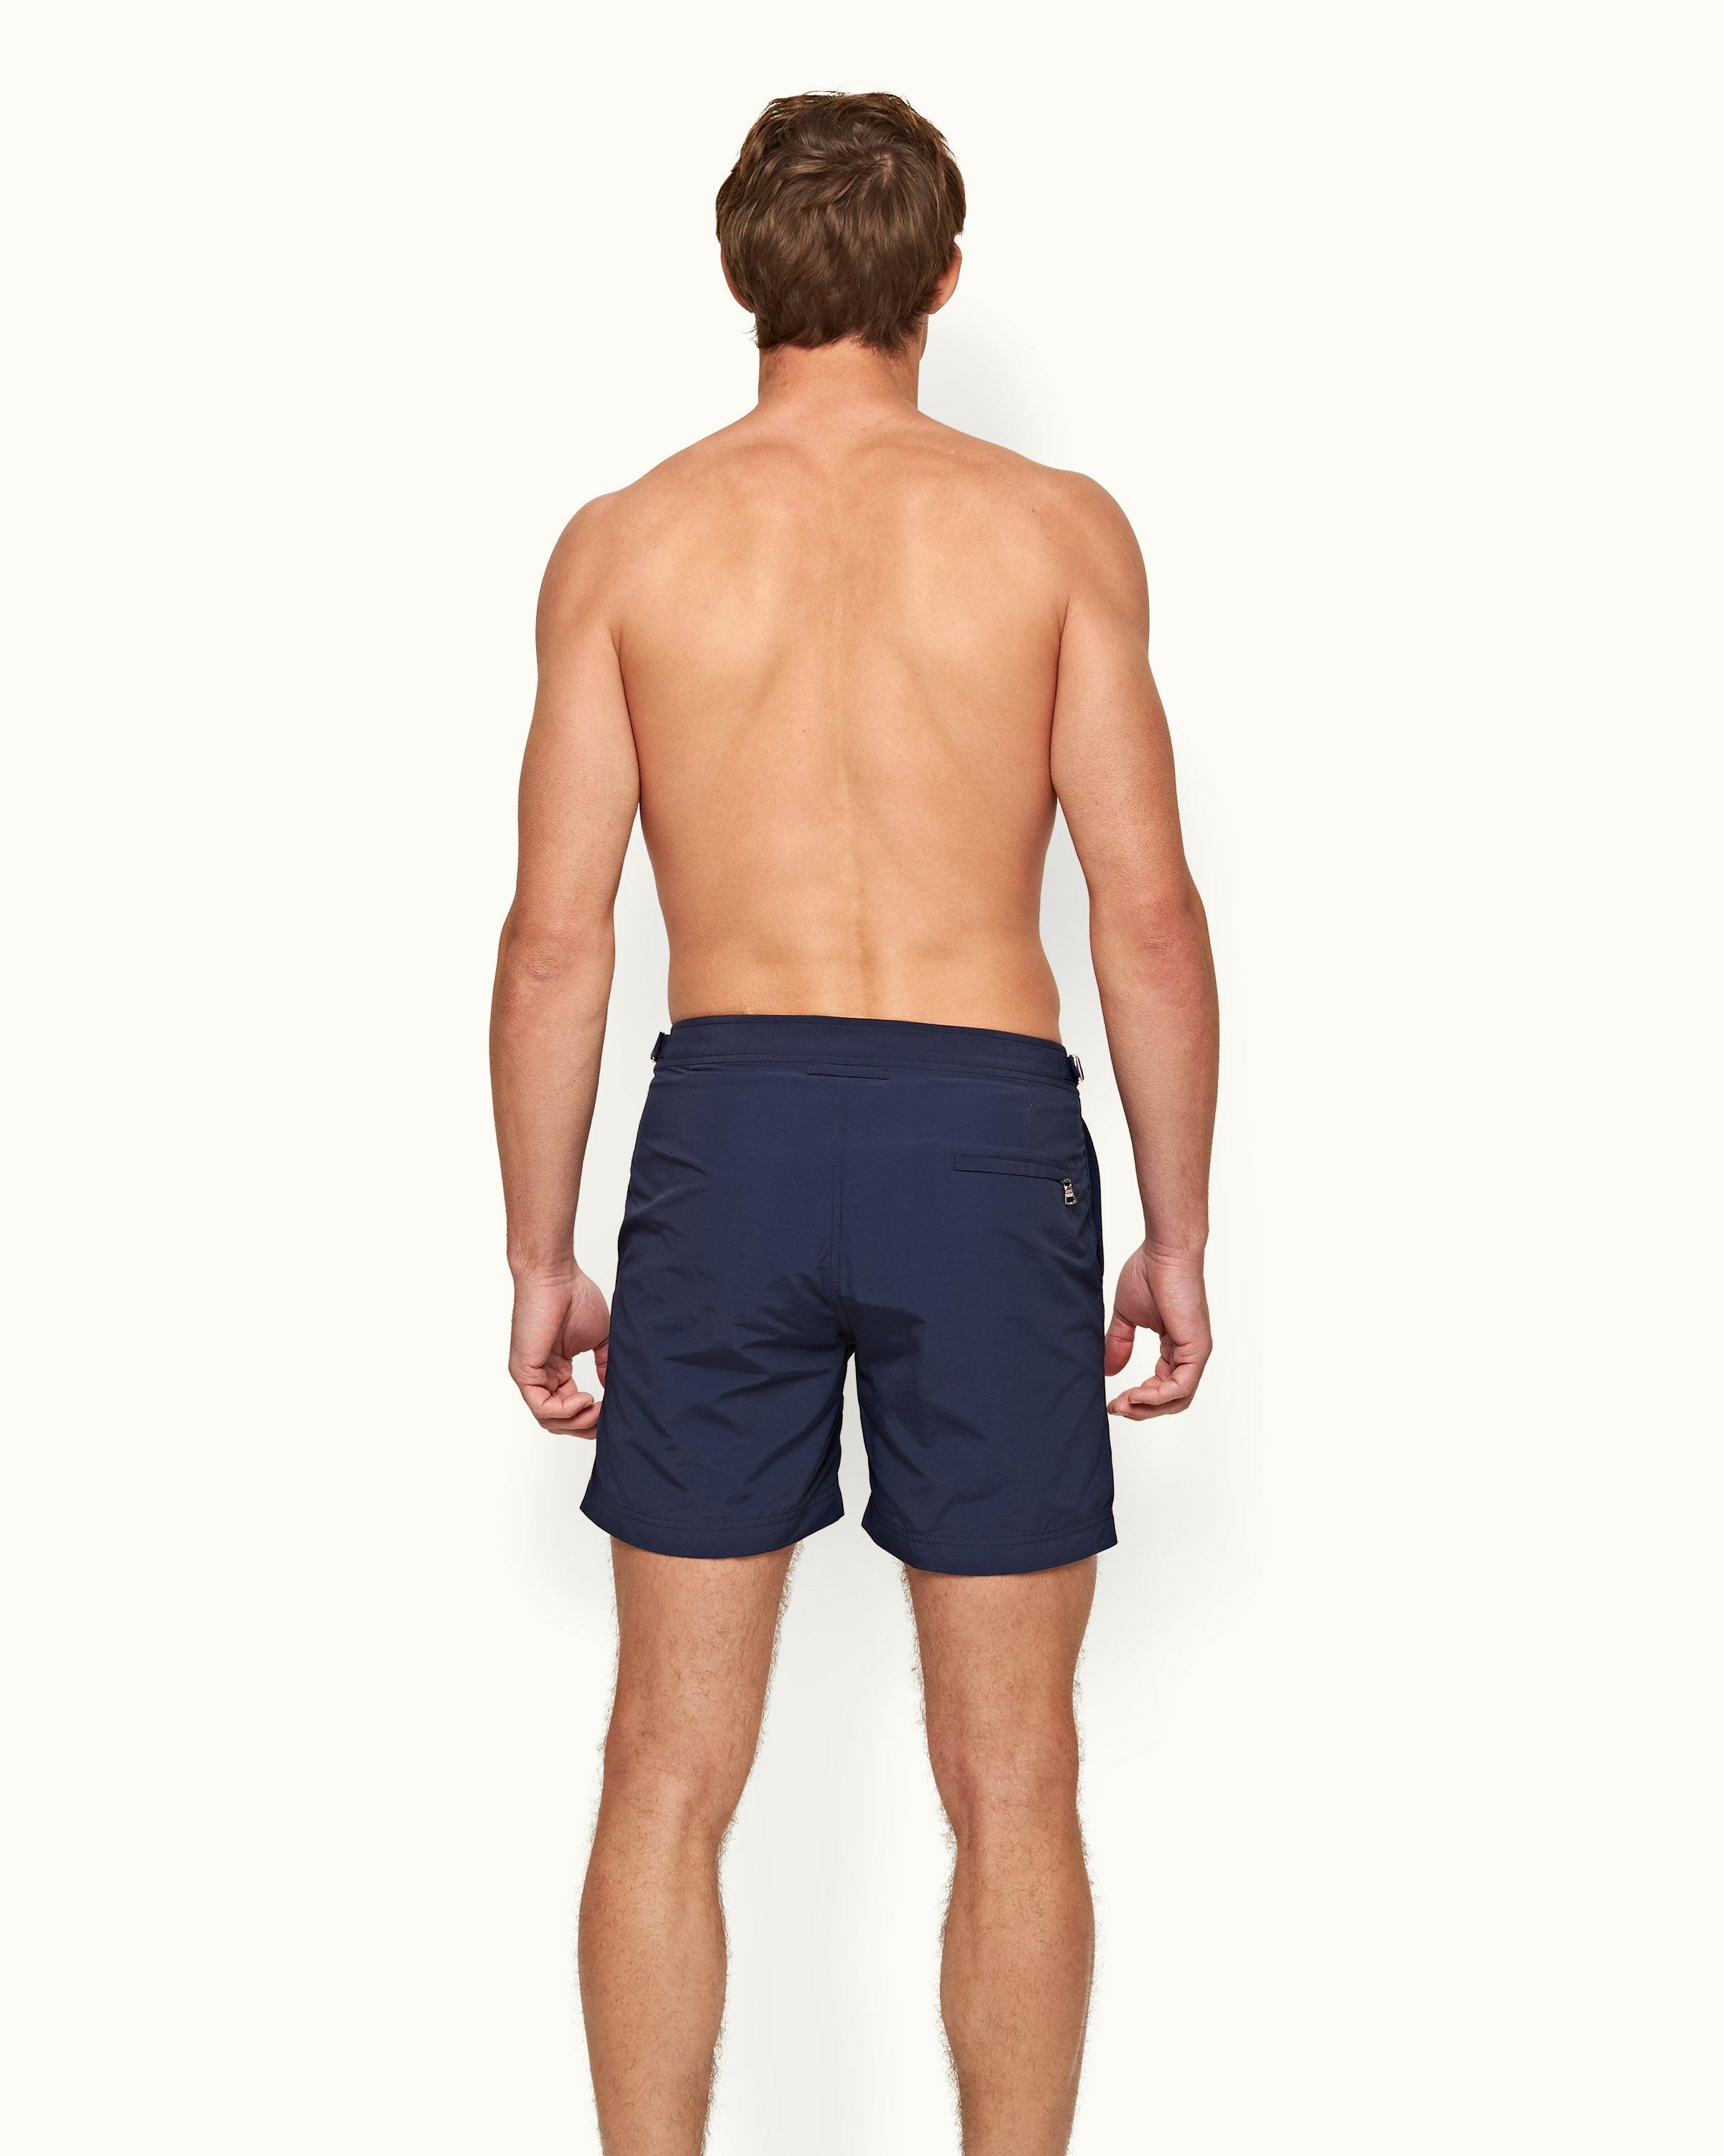 Louis Blue Shorts - Mid Thigh Length Men Swim Shorts